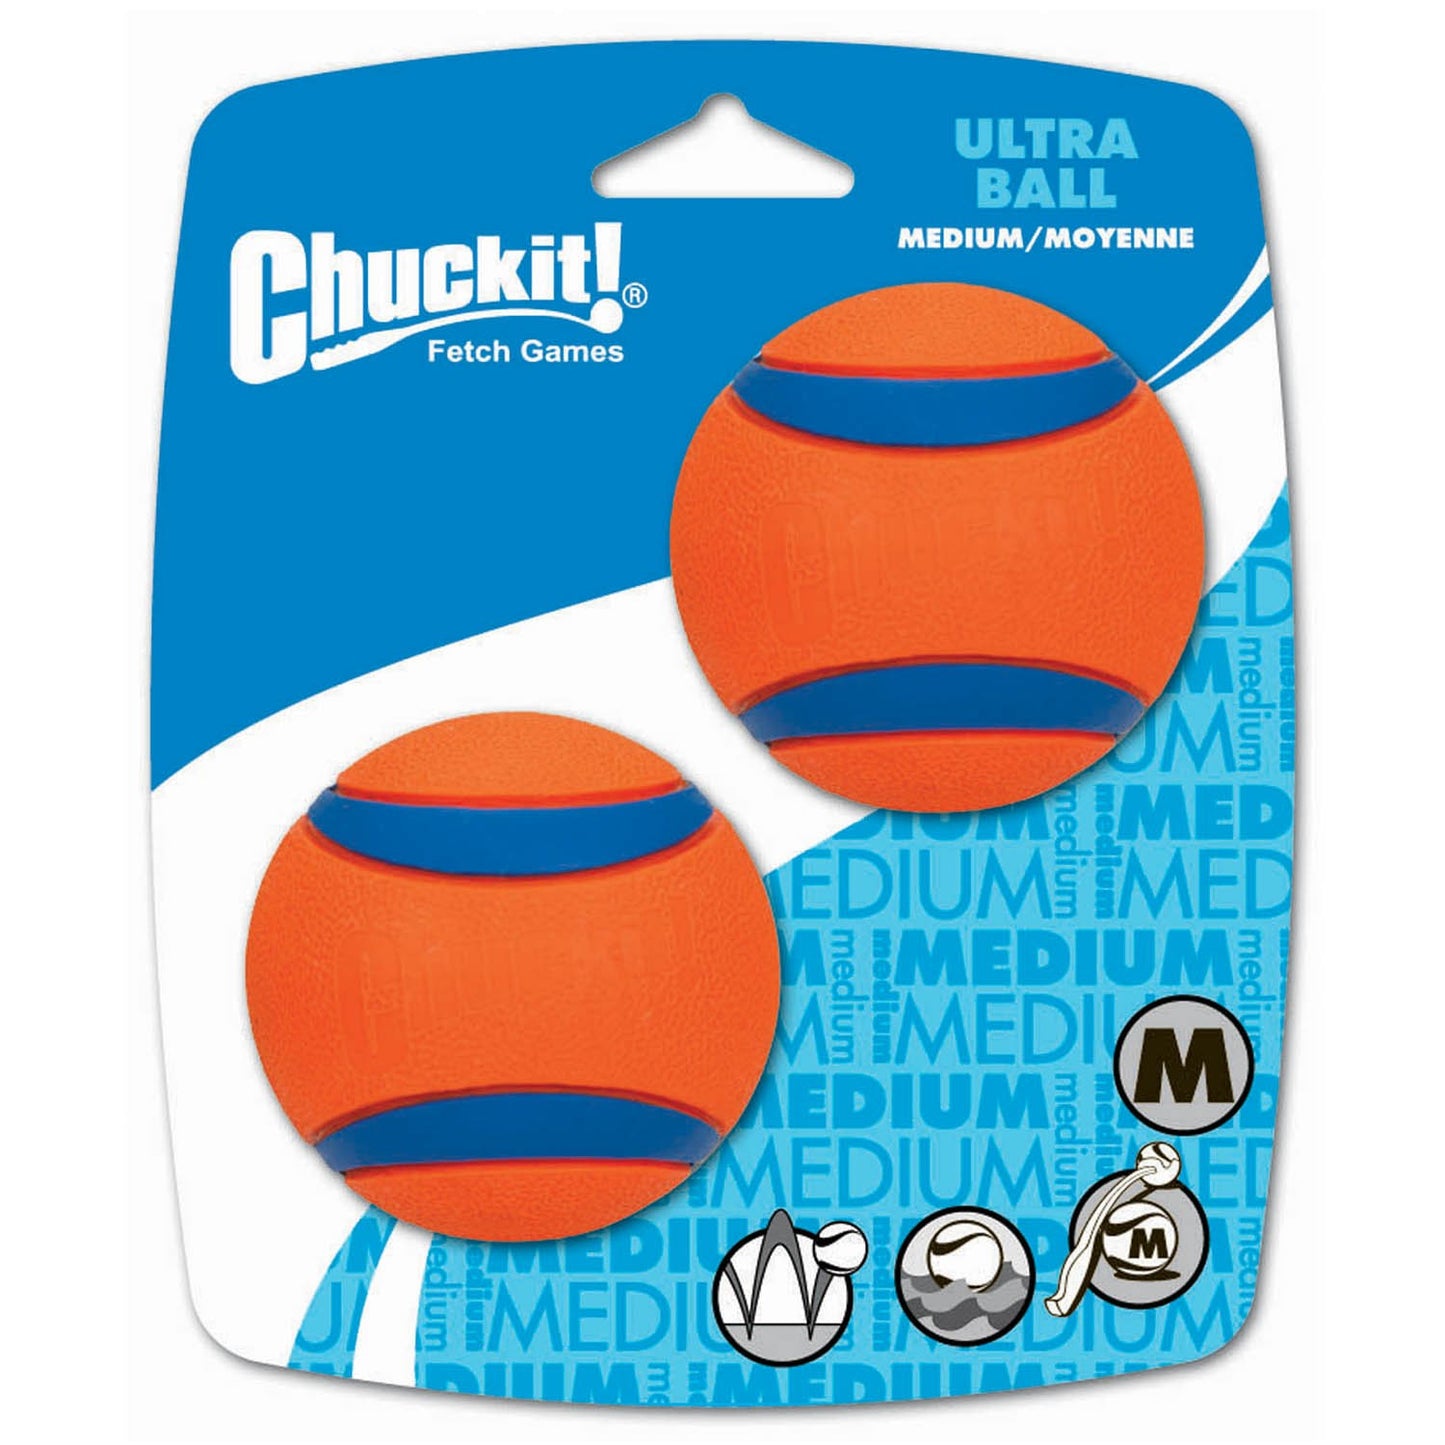 Chuck It! Ultra Ball Medium